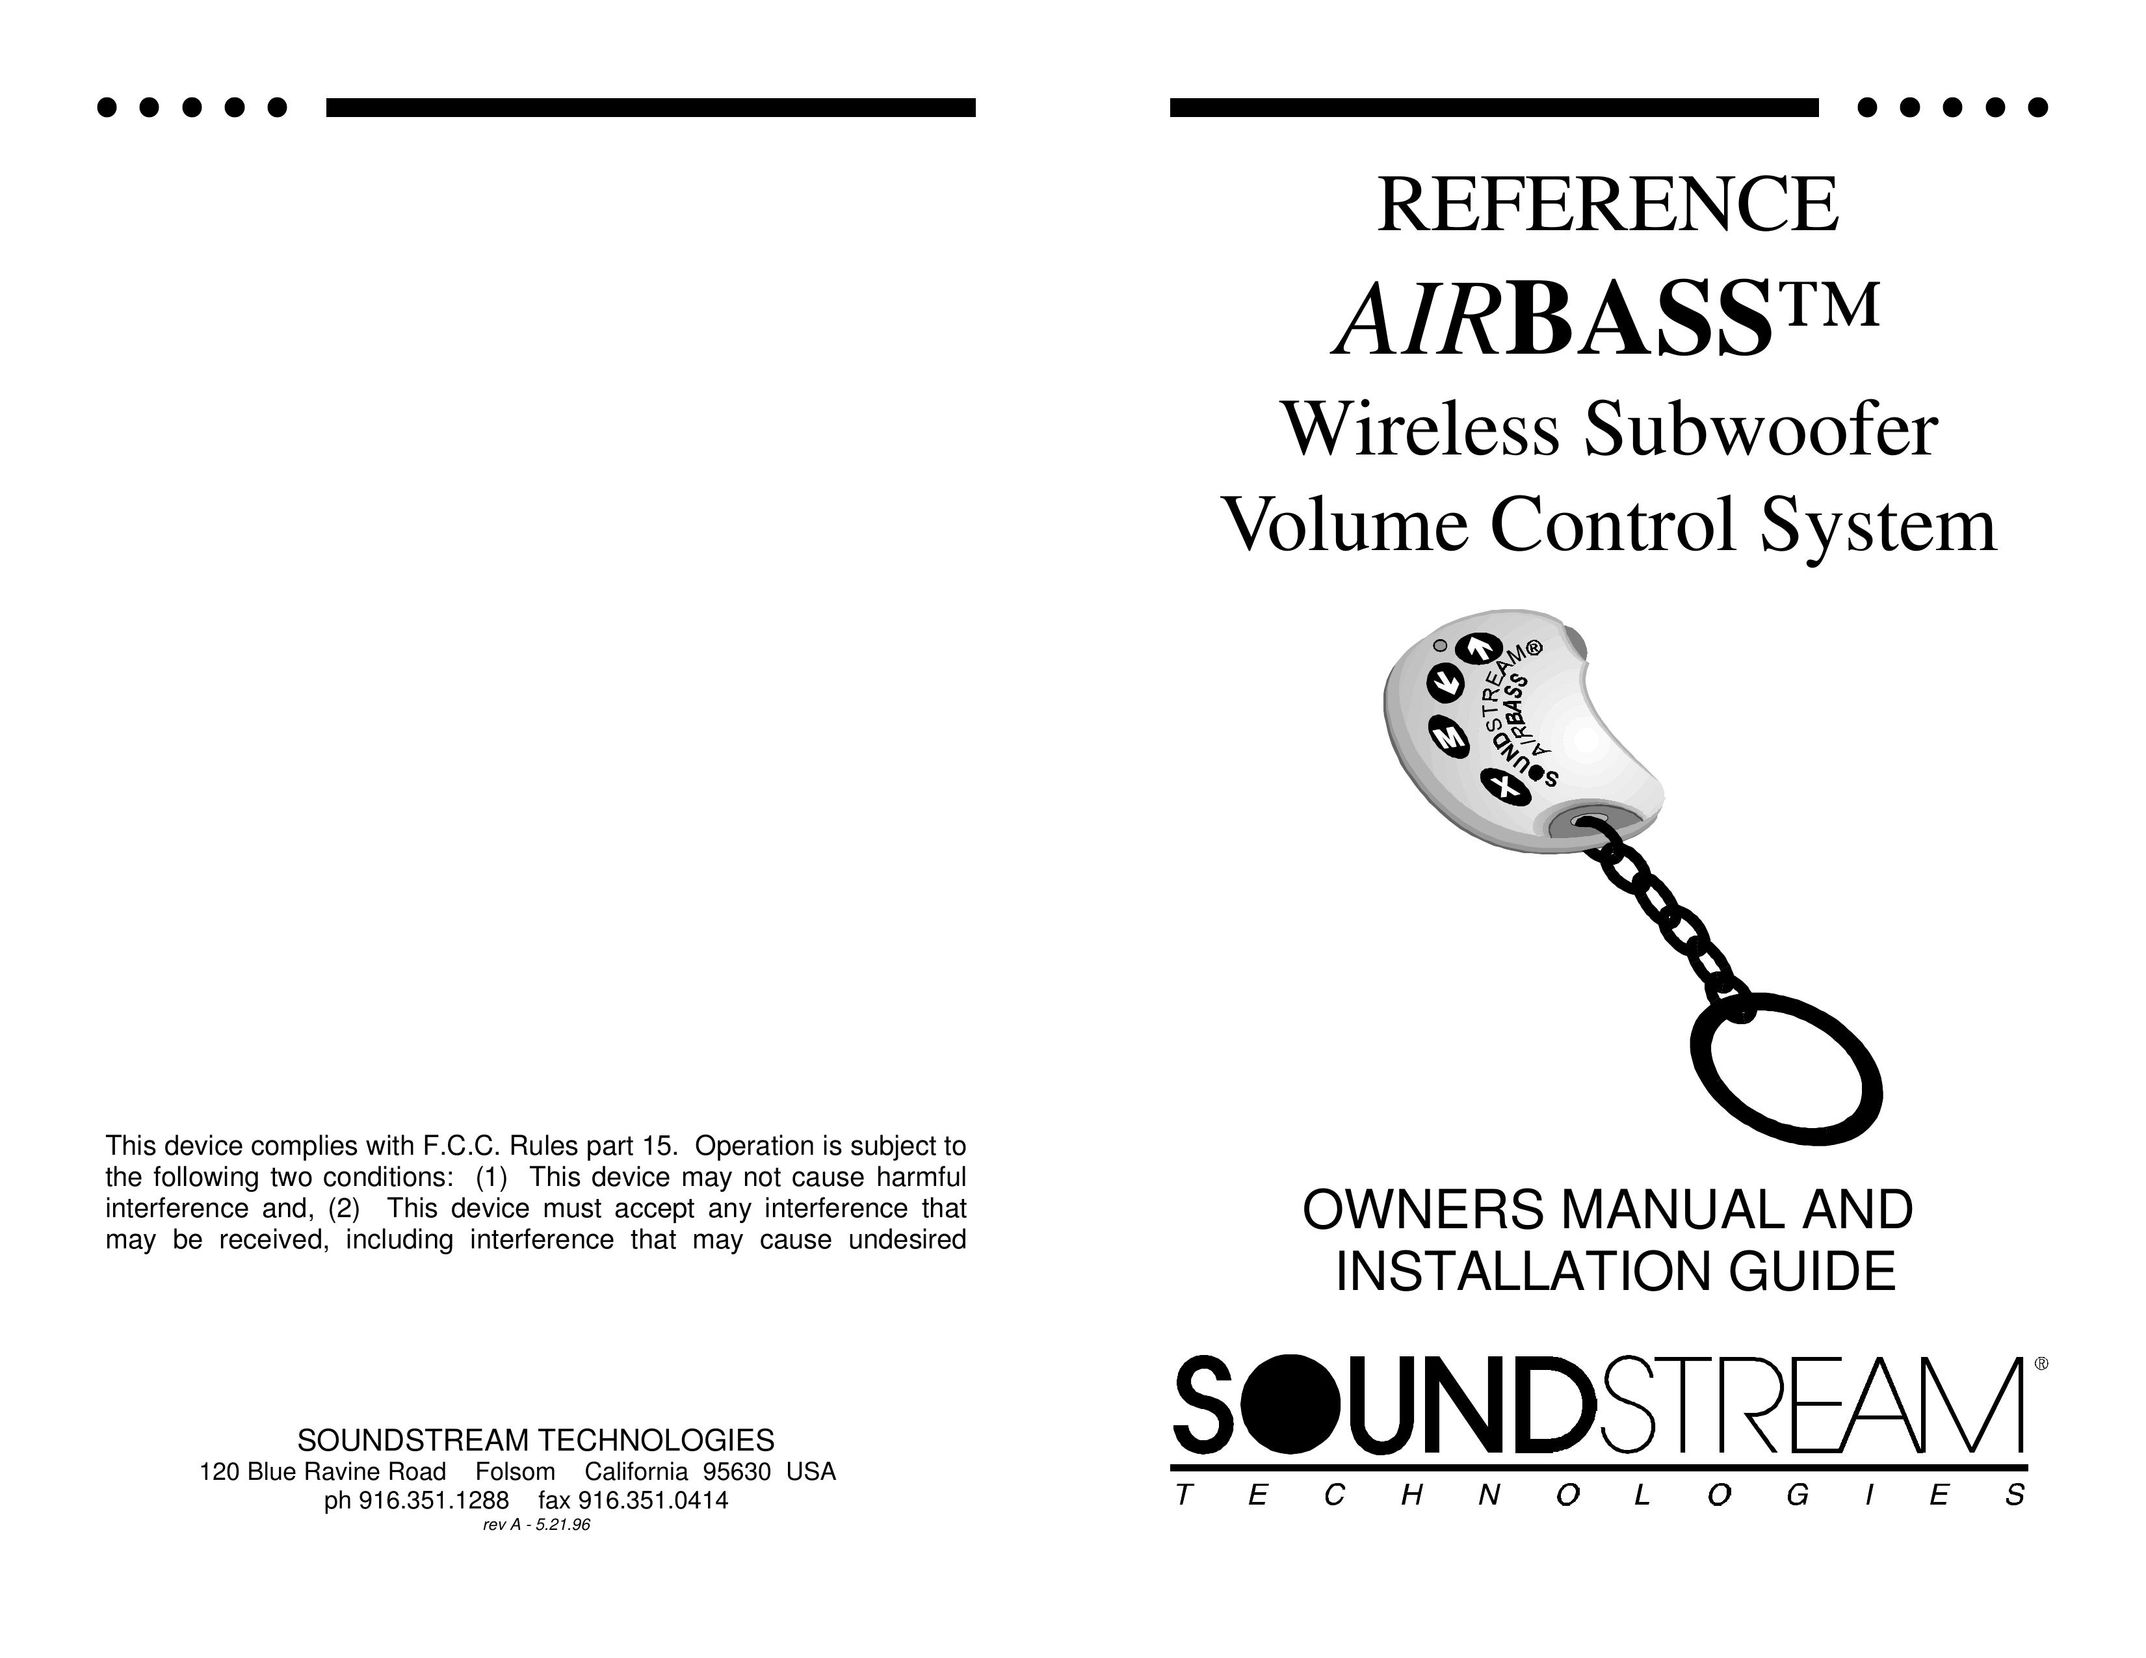 Soundstream Technologies Wireless Subwoofer Volume Control System Speaker User Manual